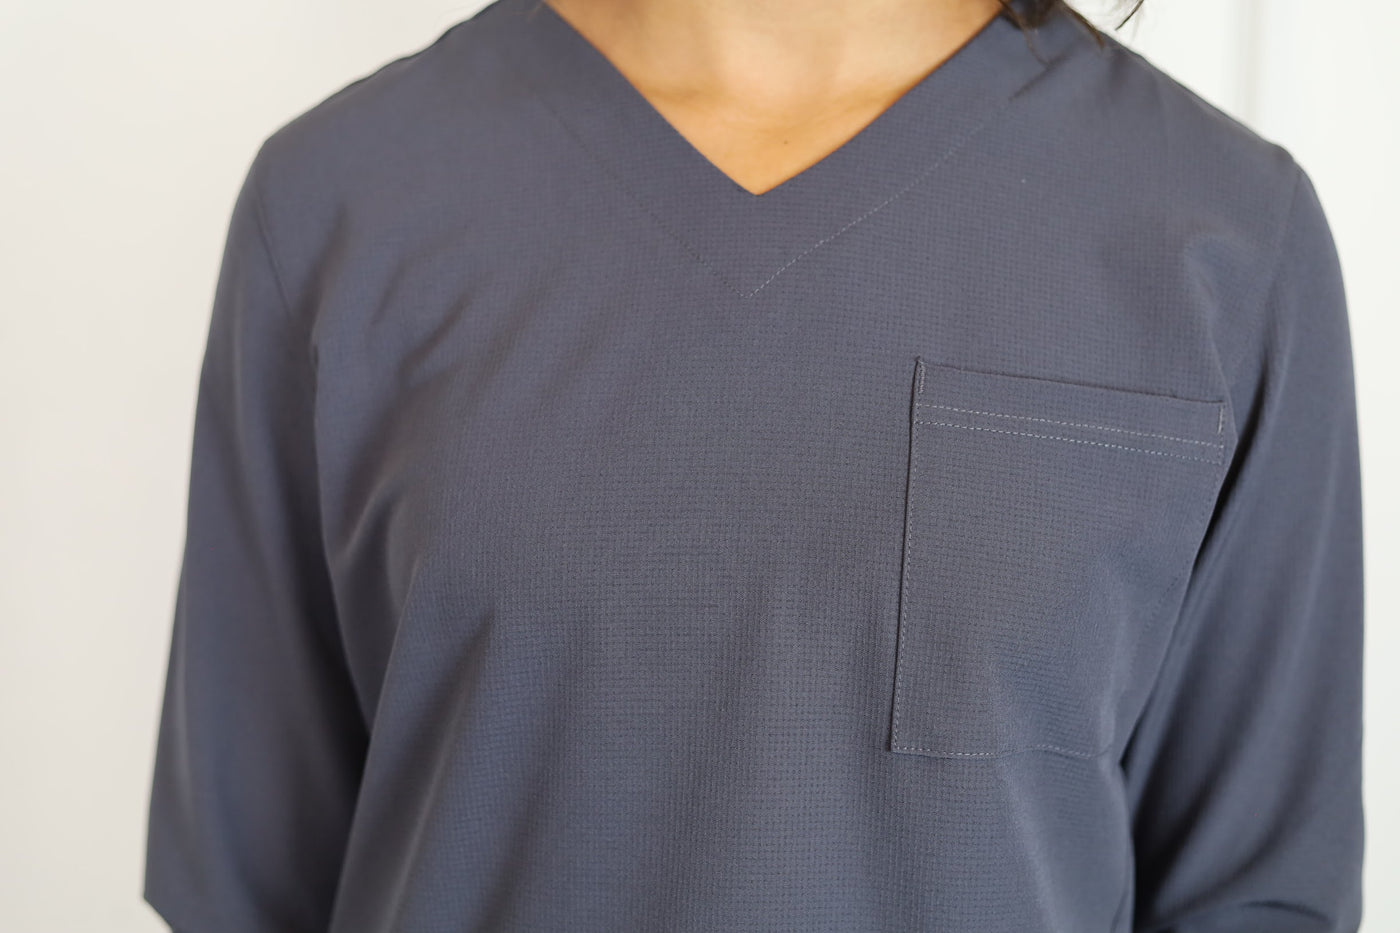 Pewter Grey Long Sleeve Women's Underscrub Shirts 2626A - The Nursing Store  Inc.